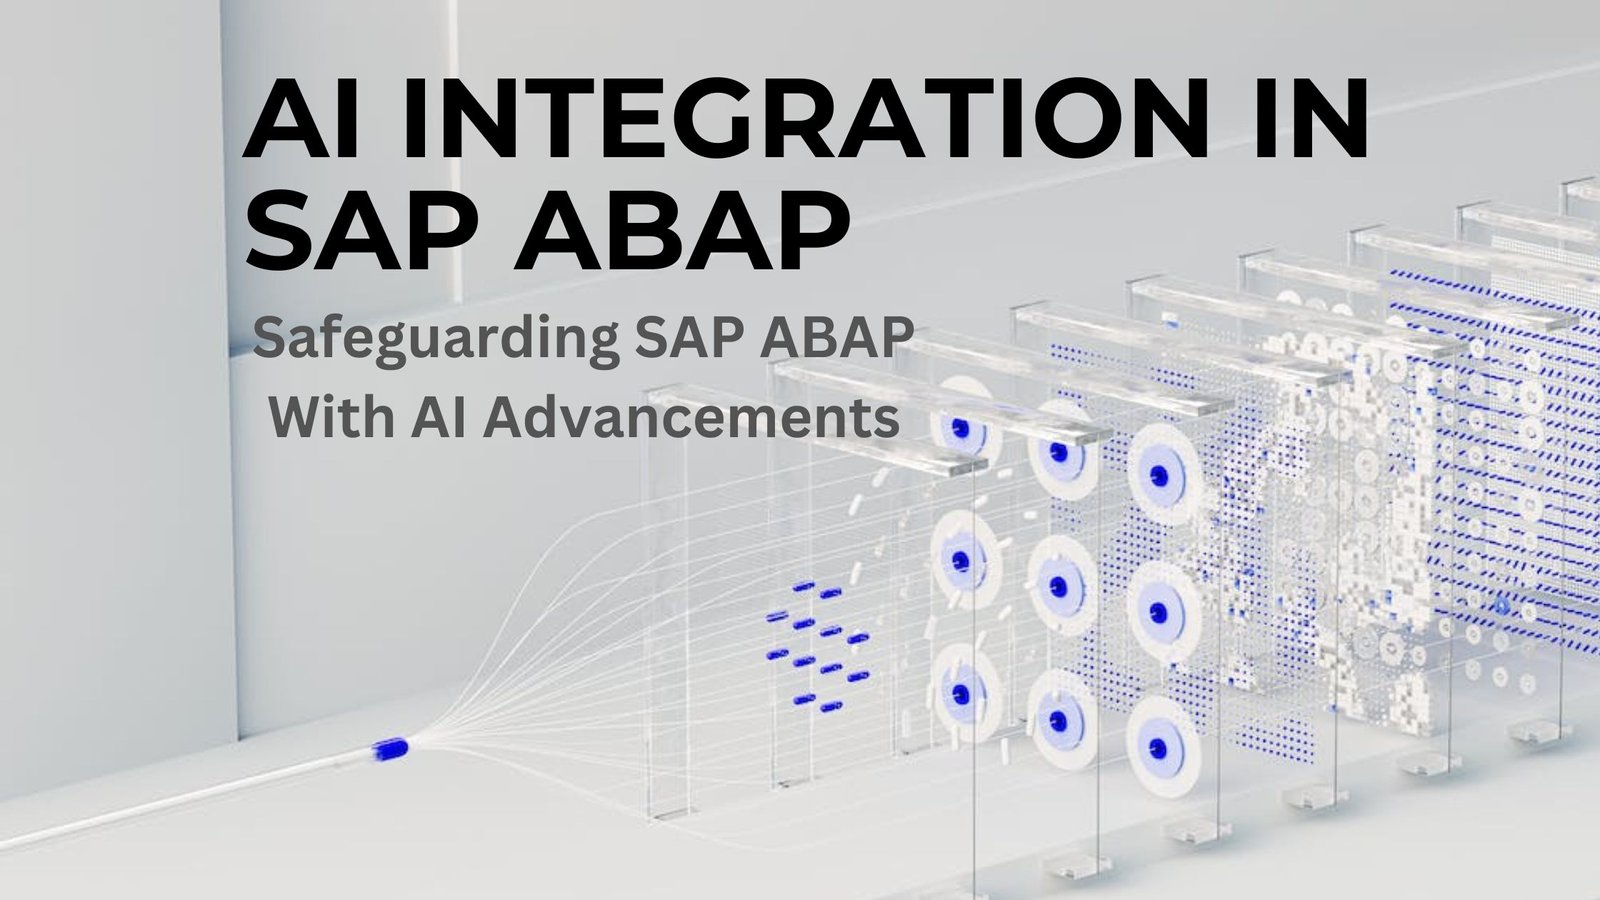 AI integration in SAP ABAP